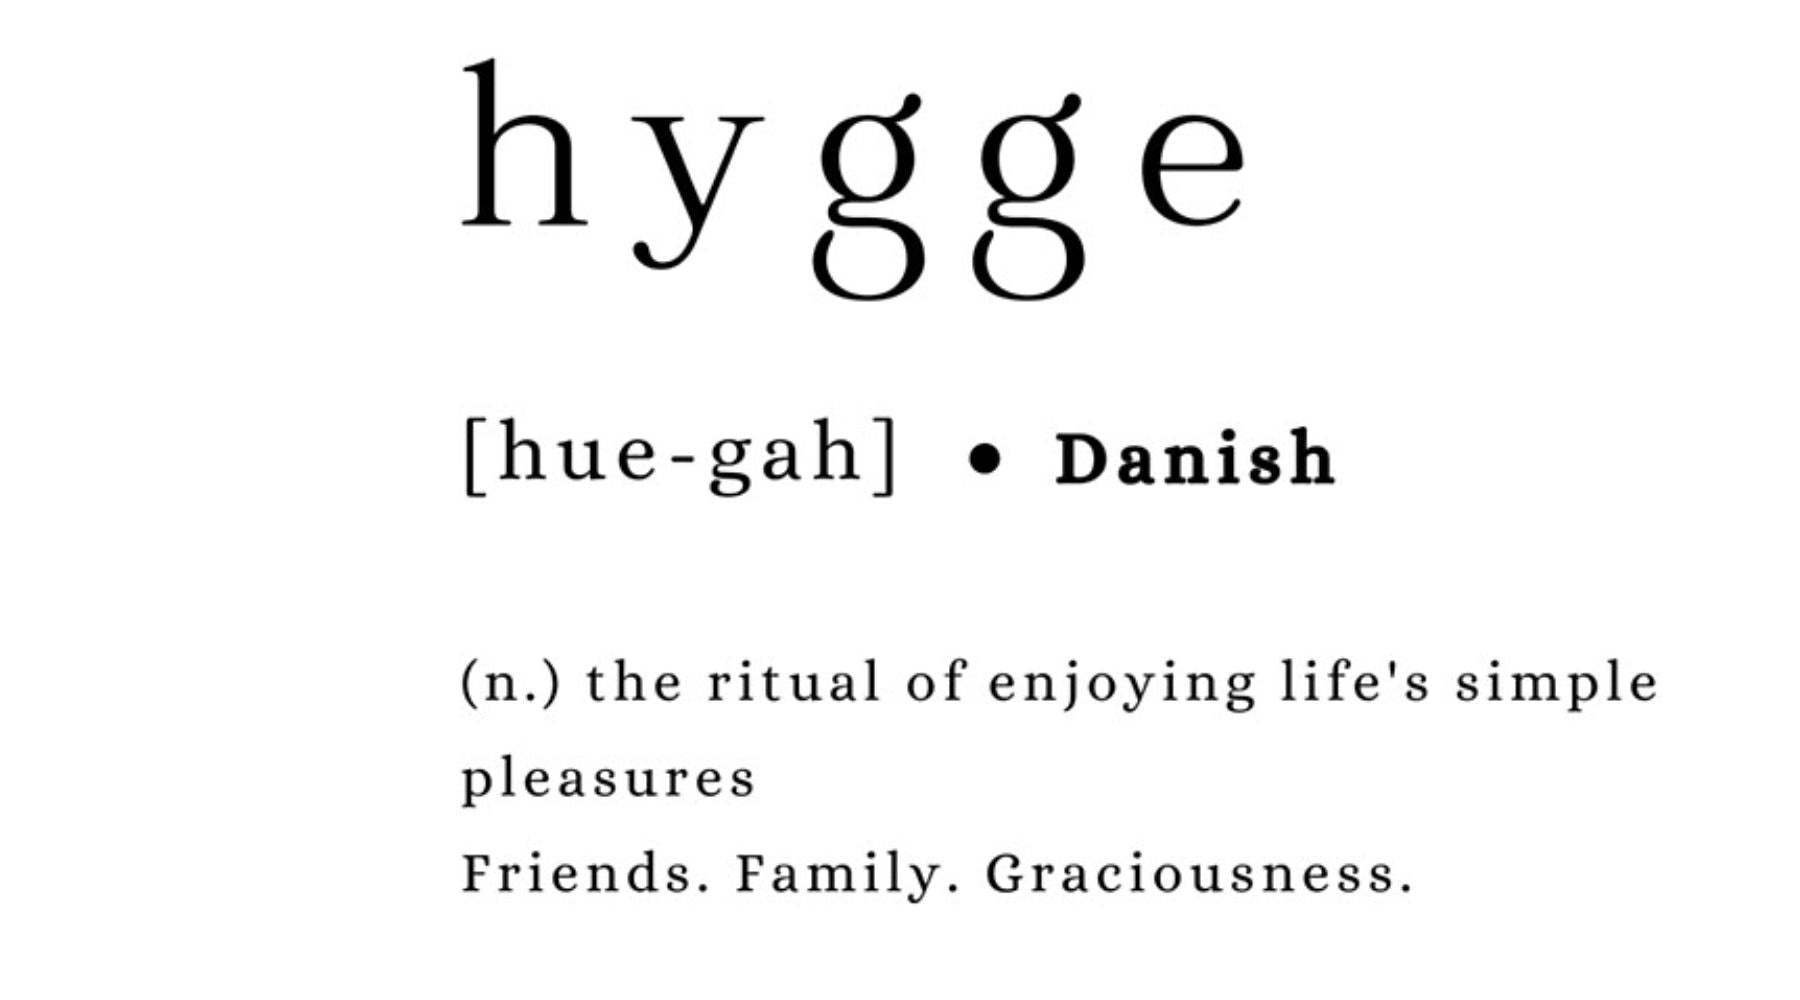 The Hygge Edit